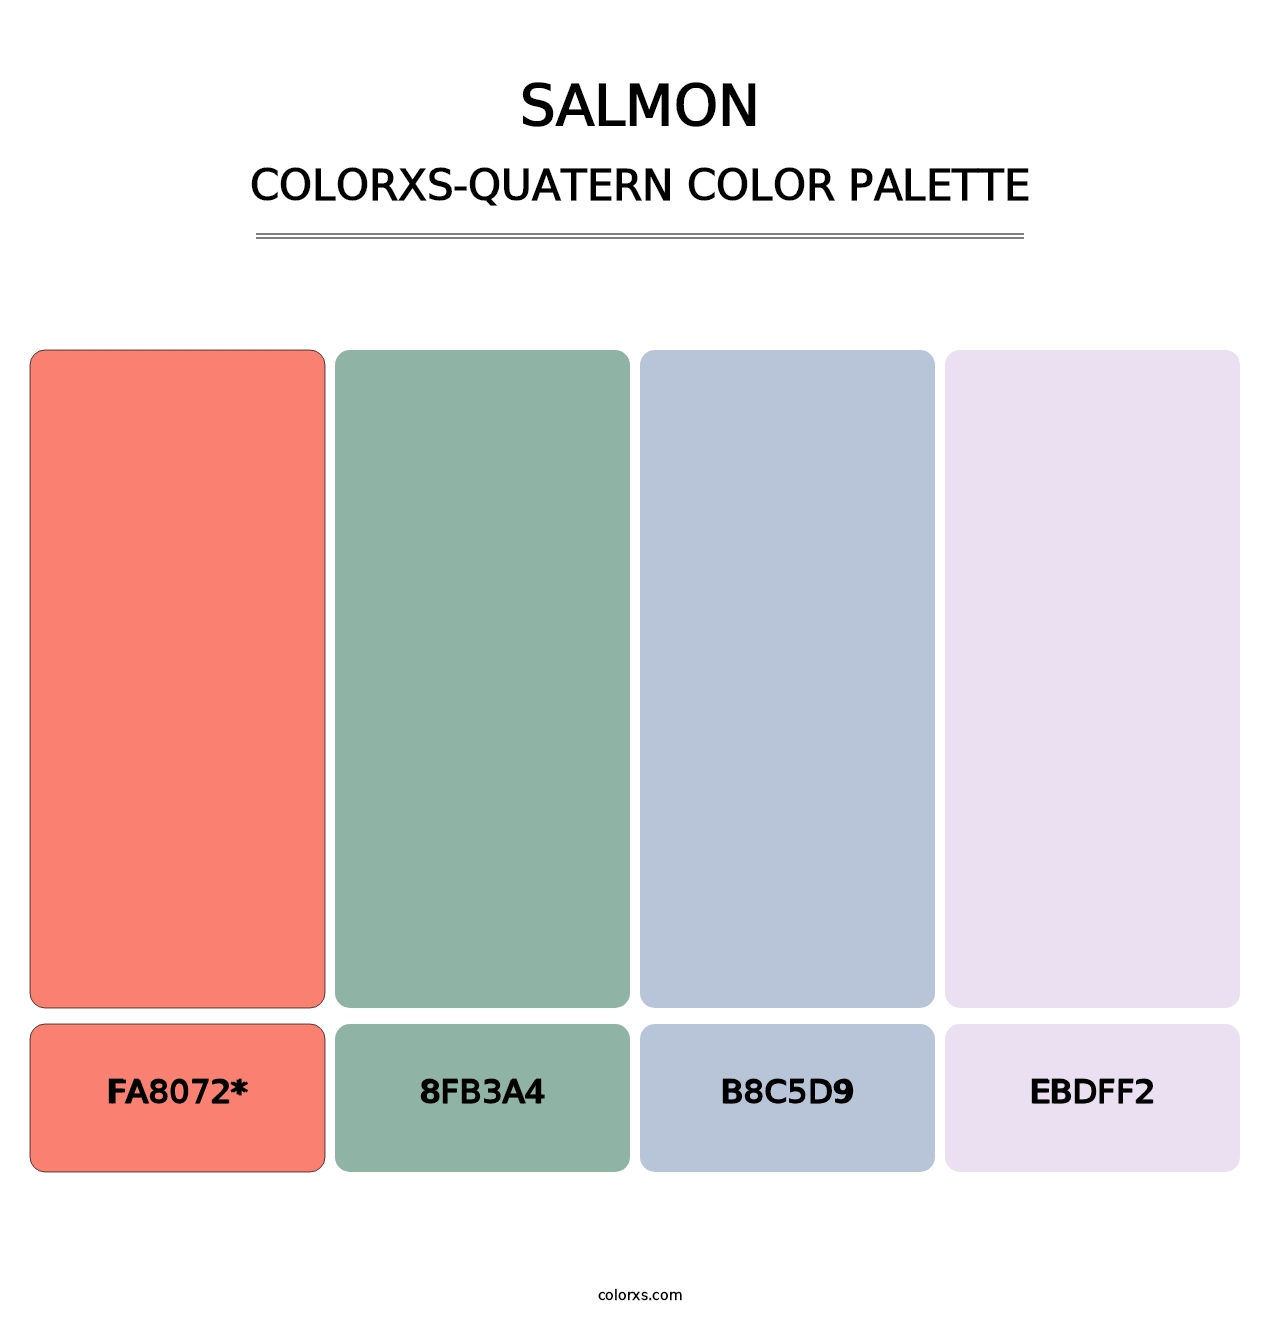 Salmon - Colorxs Quatern Palette